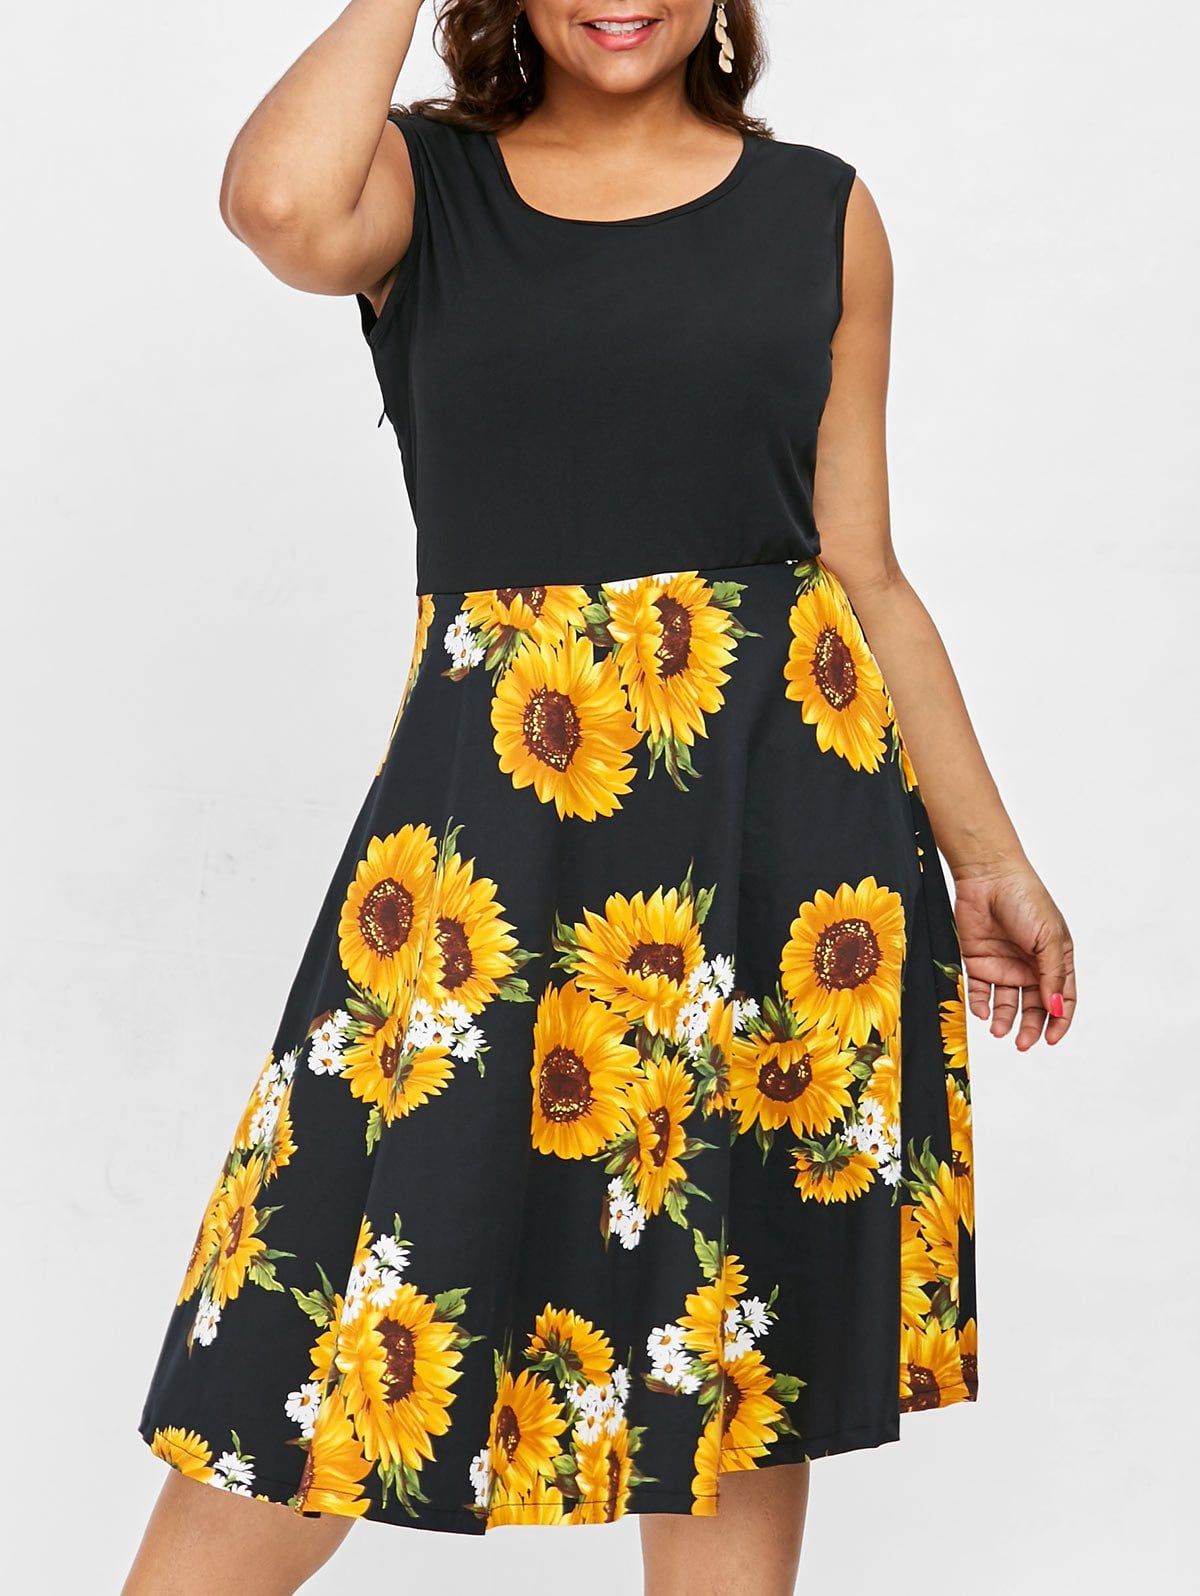 Sunflower Maxi Dress For Sale 2021